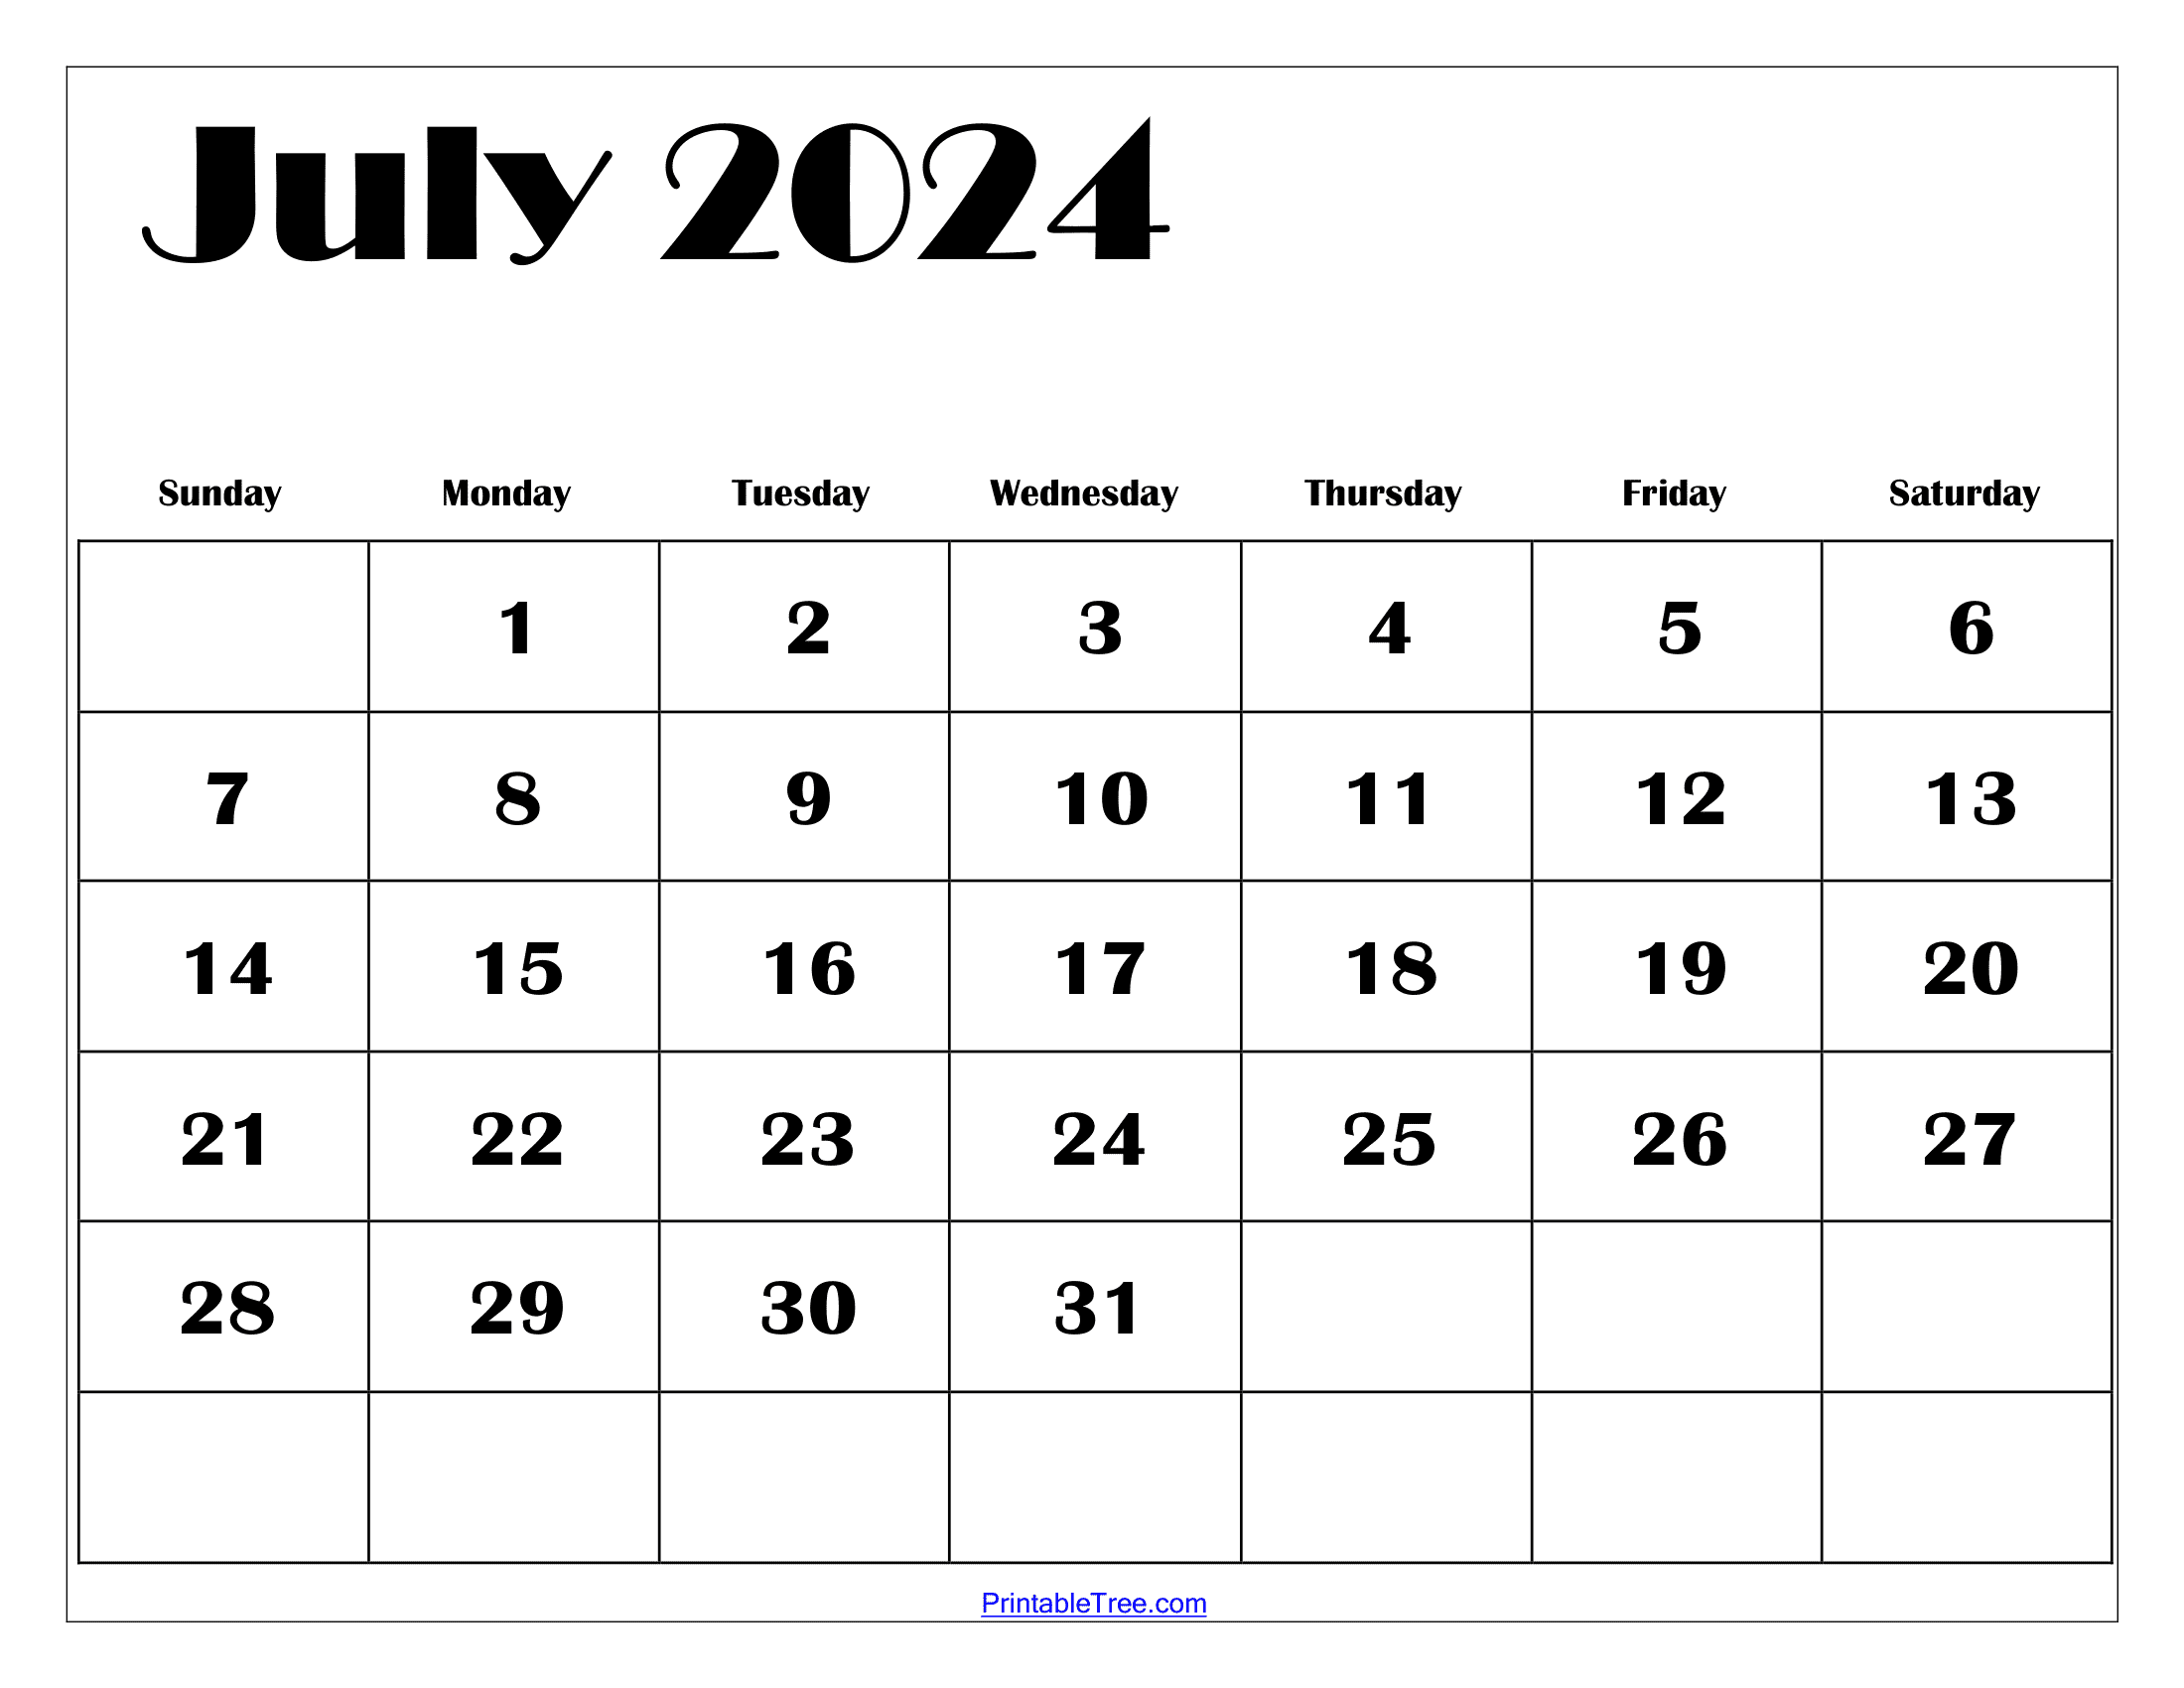 July 2024 Calendar Printable Pdf With Holidays Free Template for July 2024 Monthly Calendar Printable